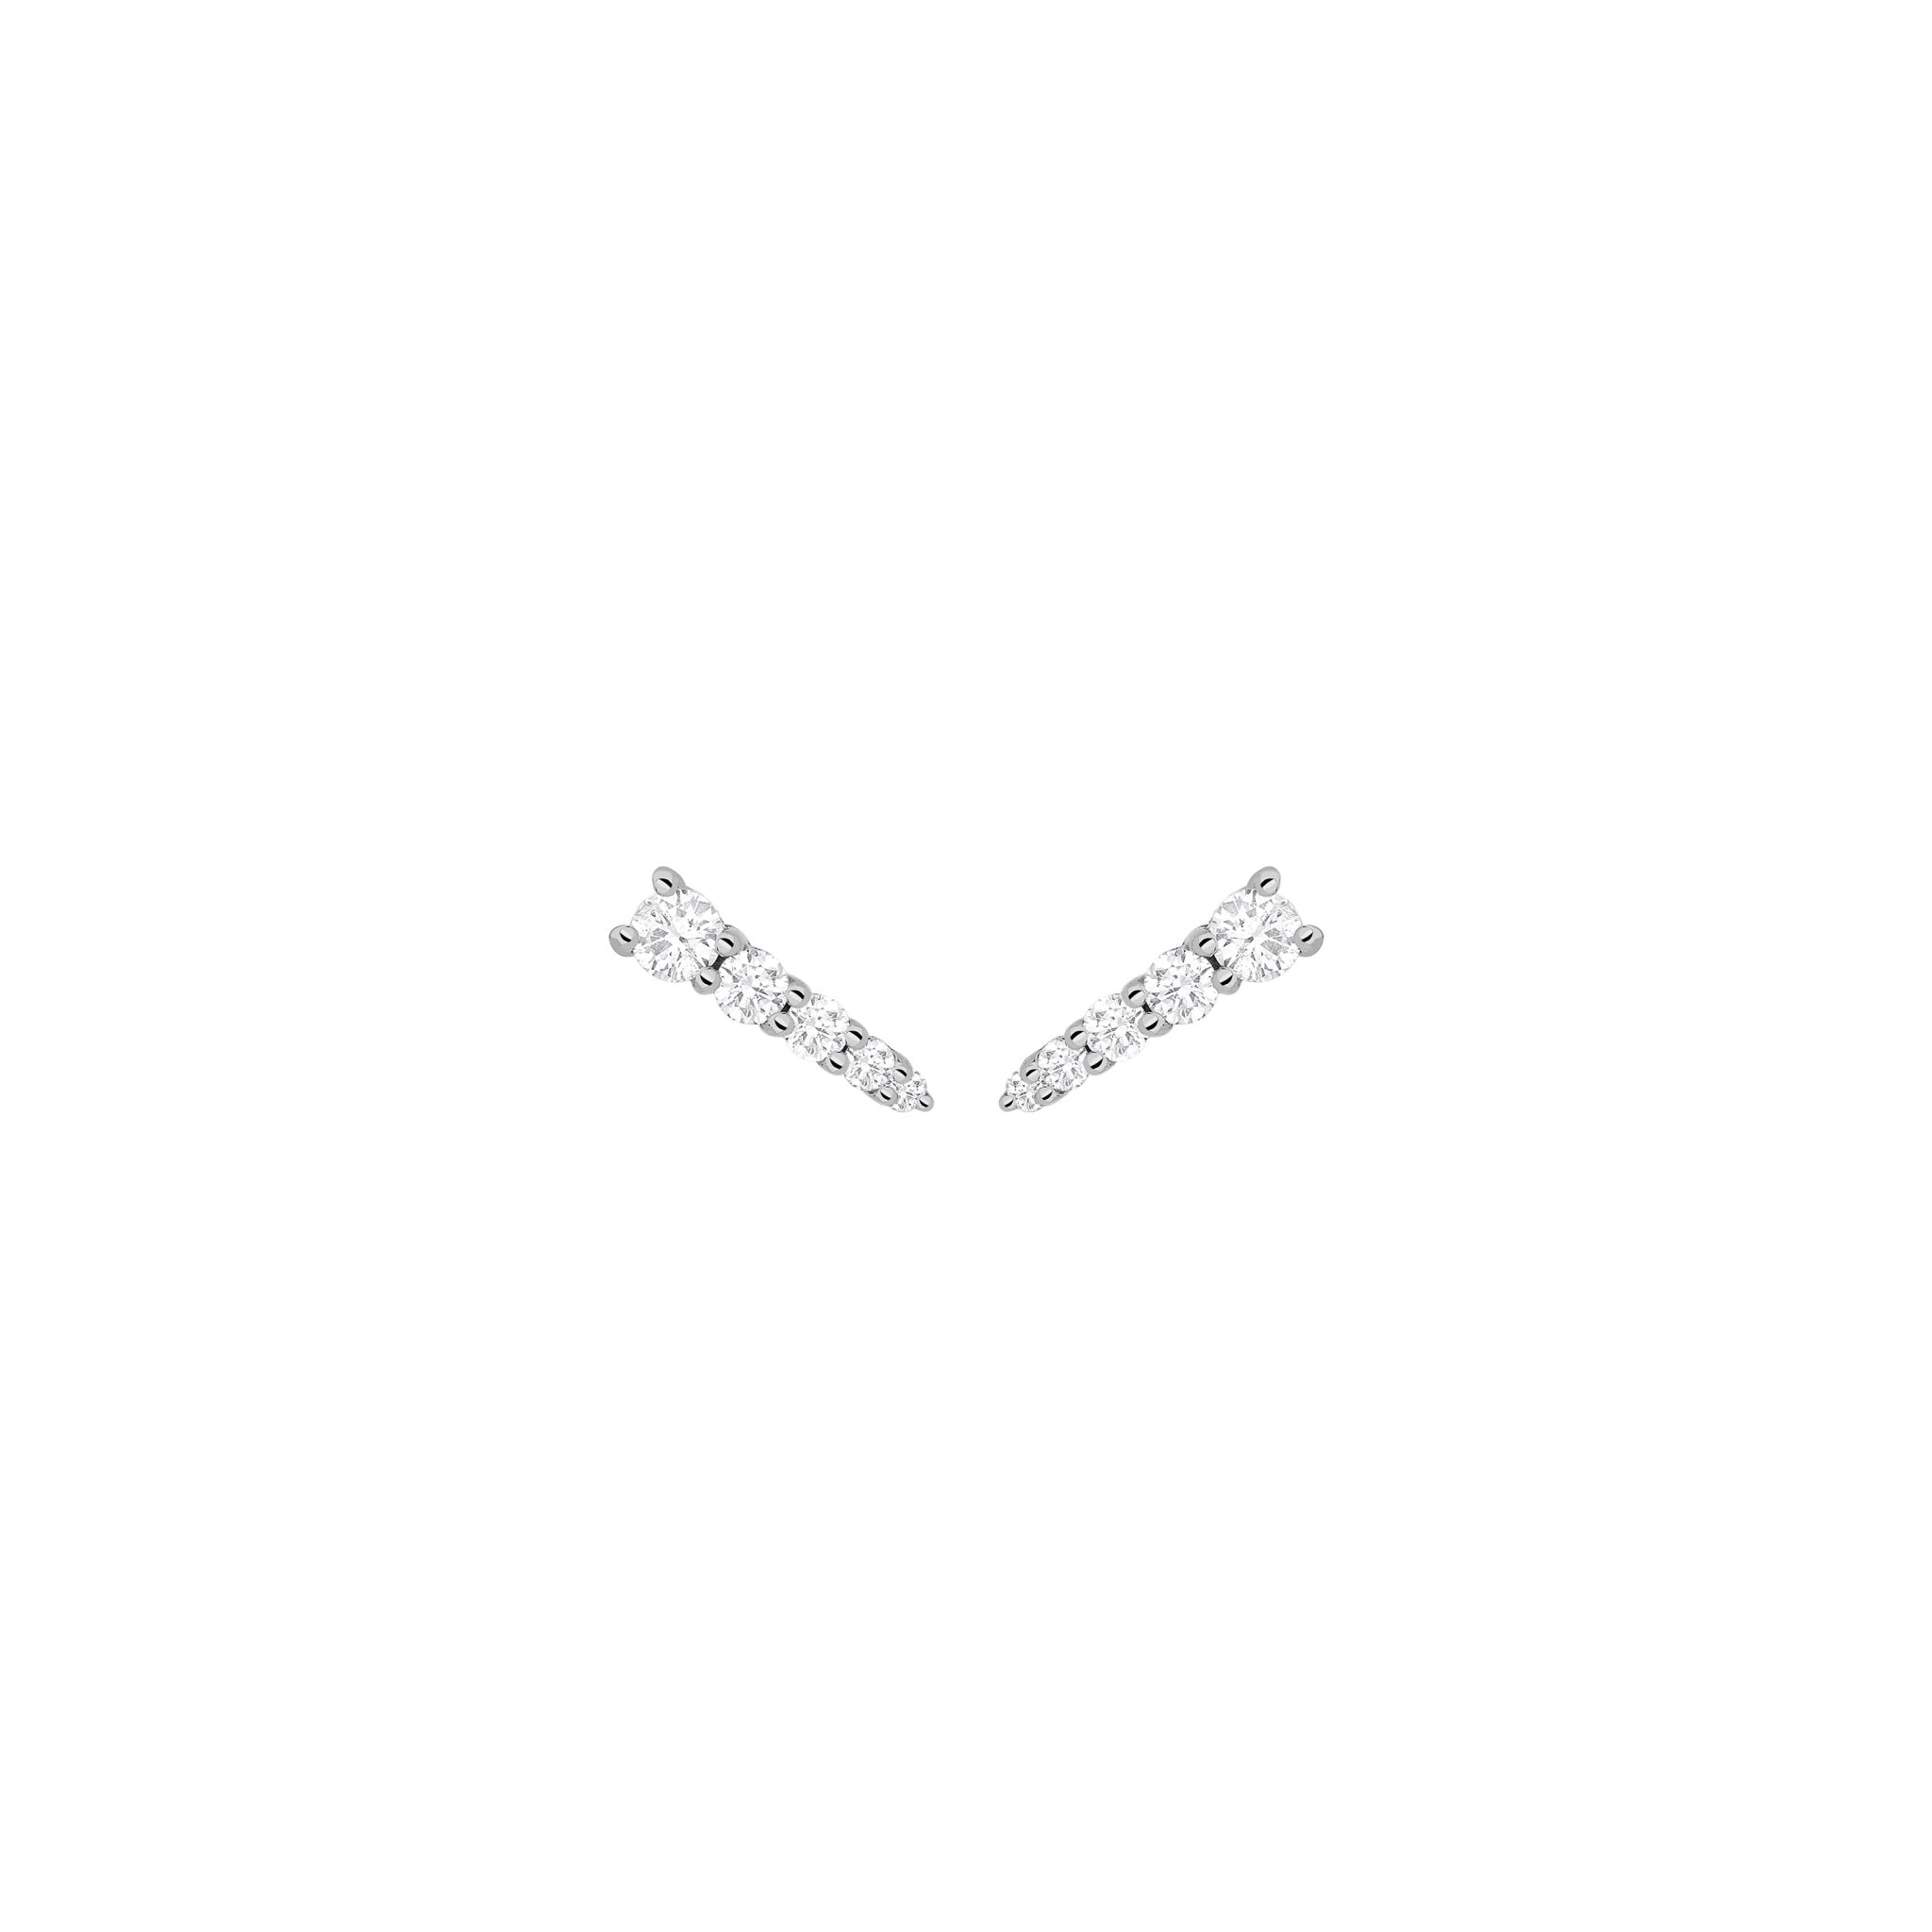 Brinco Ear Cuff Rock Star - P | Ouro Branco 18K e Diamantes - Jack Vartanian - Ear Cuffs